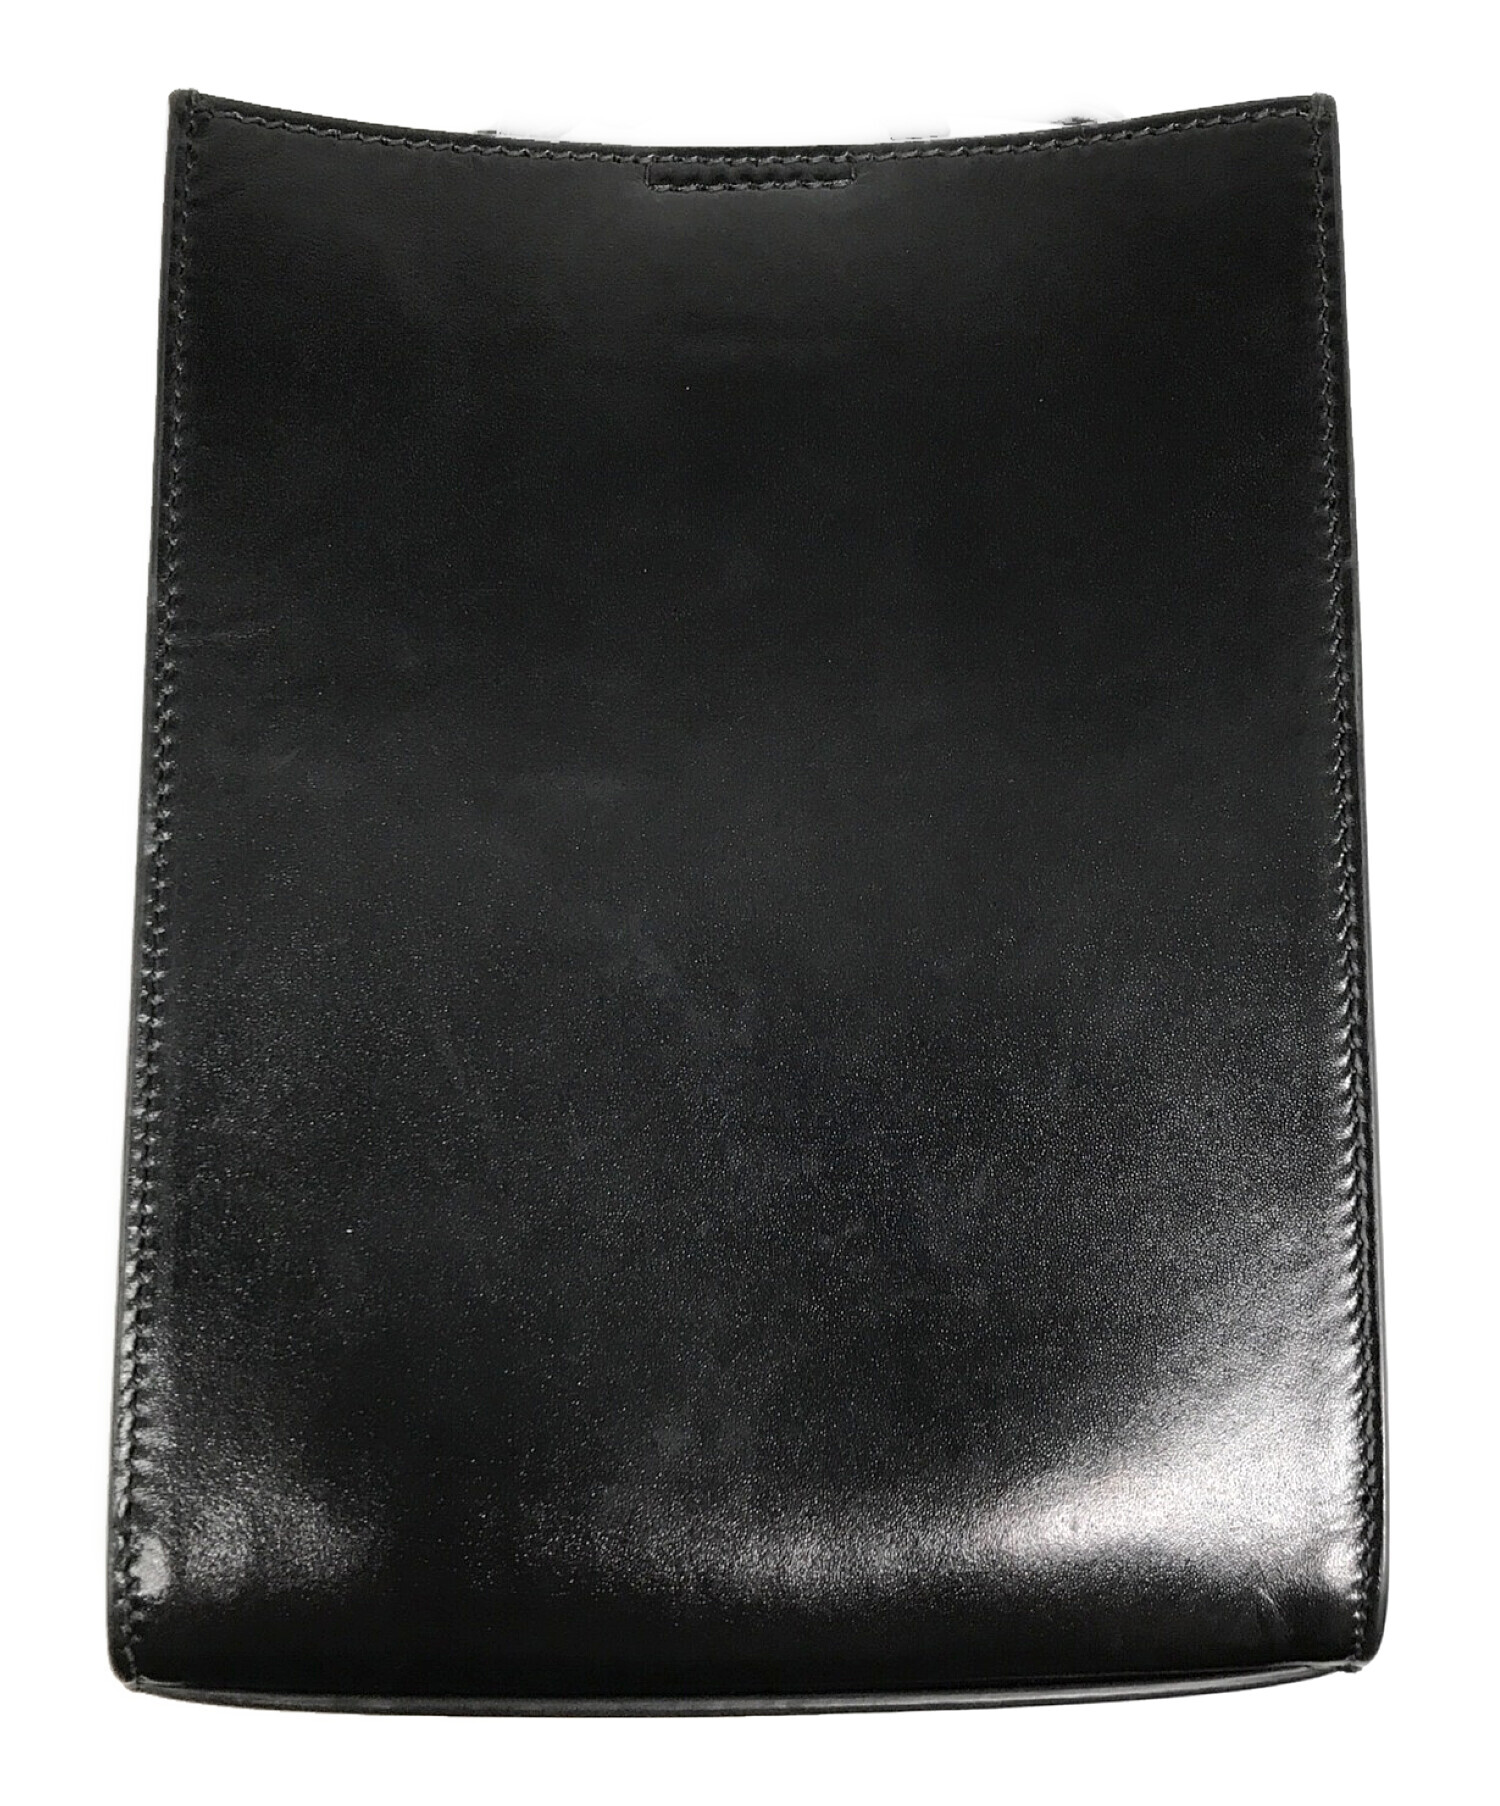 JILSANDER ジルサンダー Tangle leather wallet